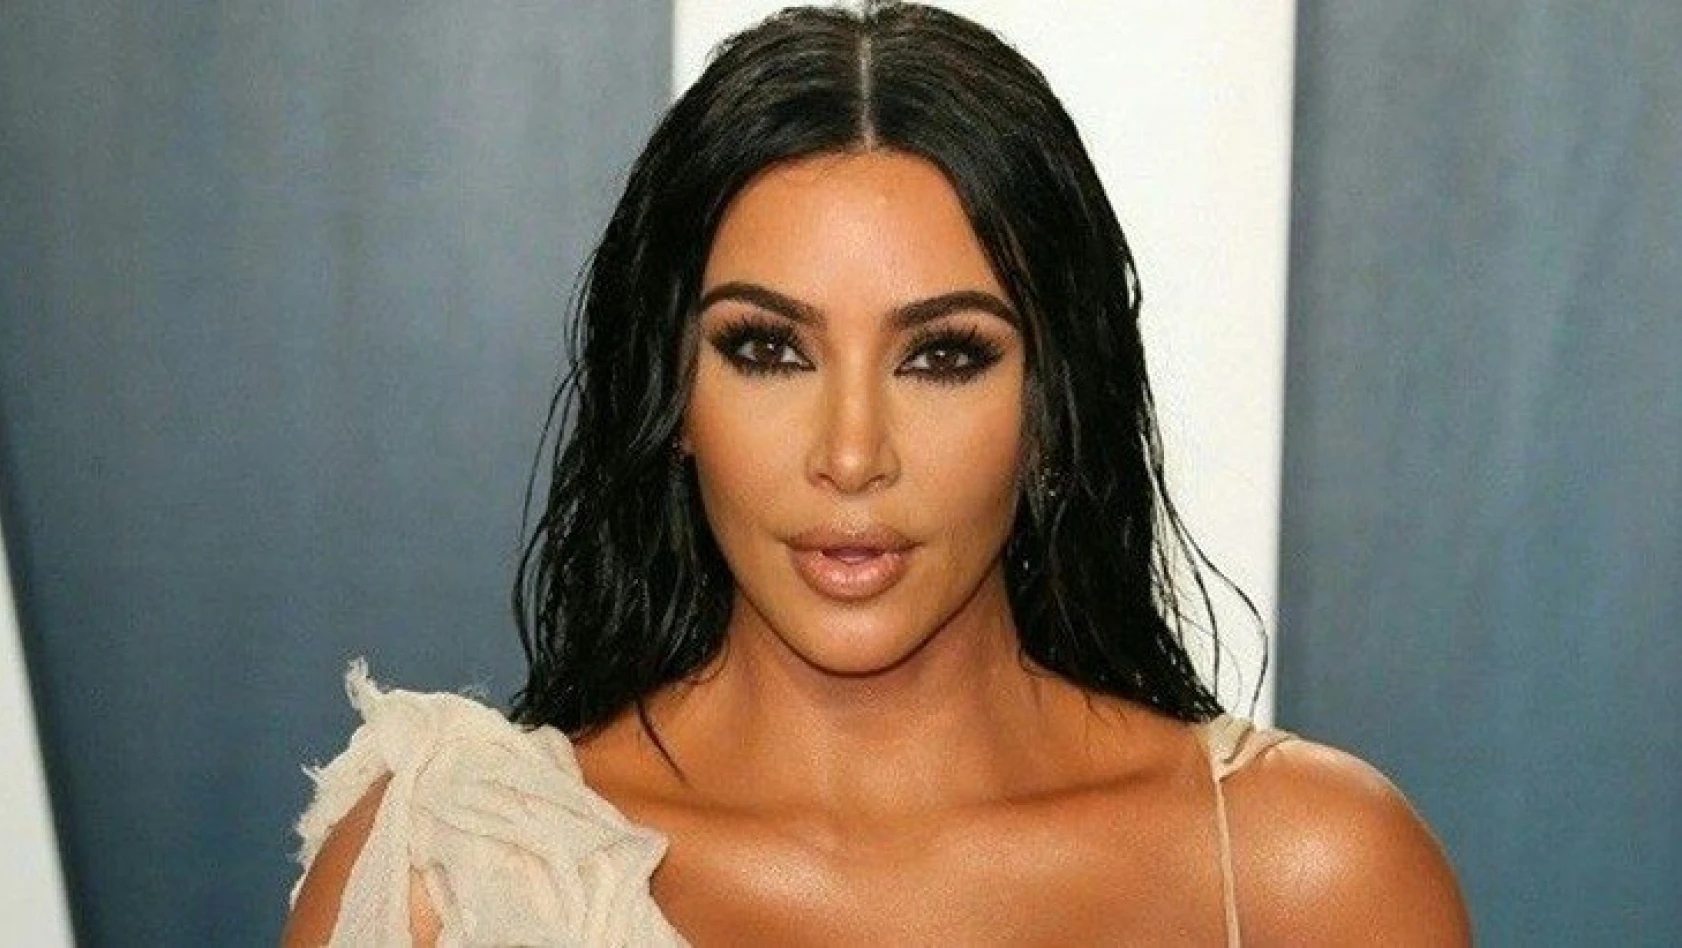 Seks kasedi sızdırılan Kim Kardashian'dan yıllar sonra şaşırtan itiraf